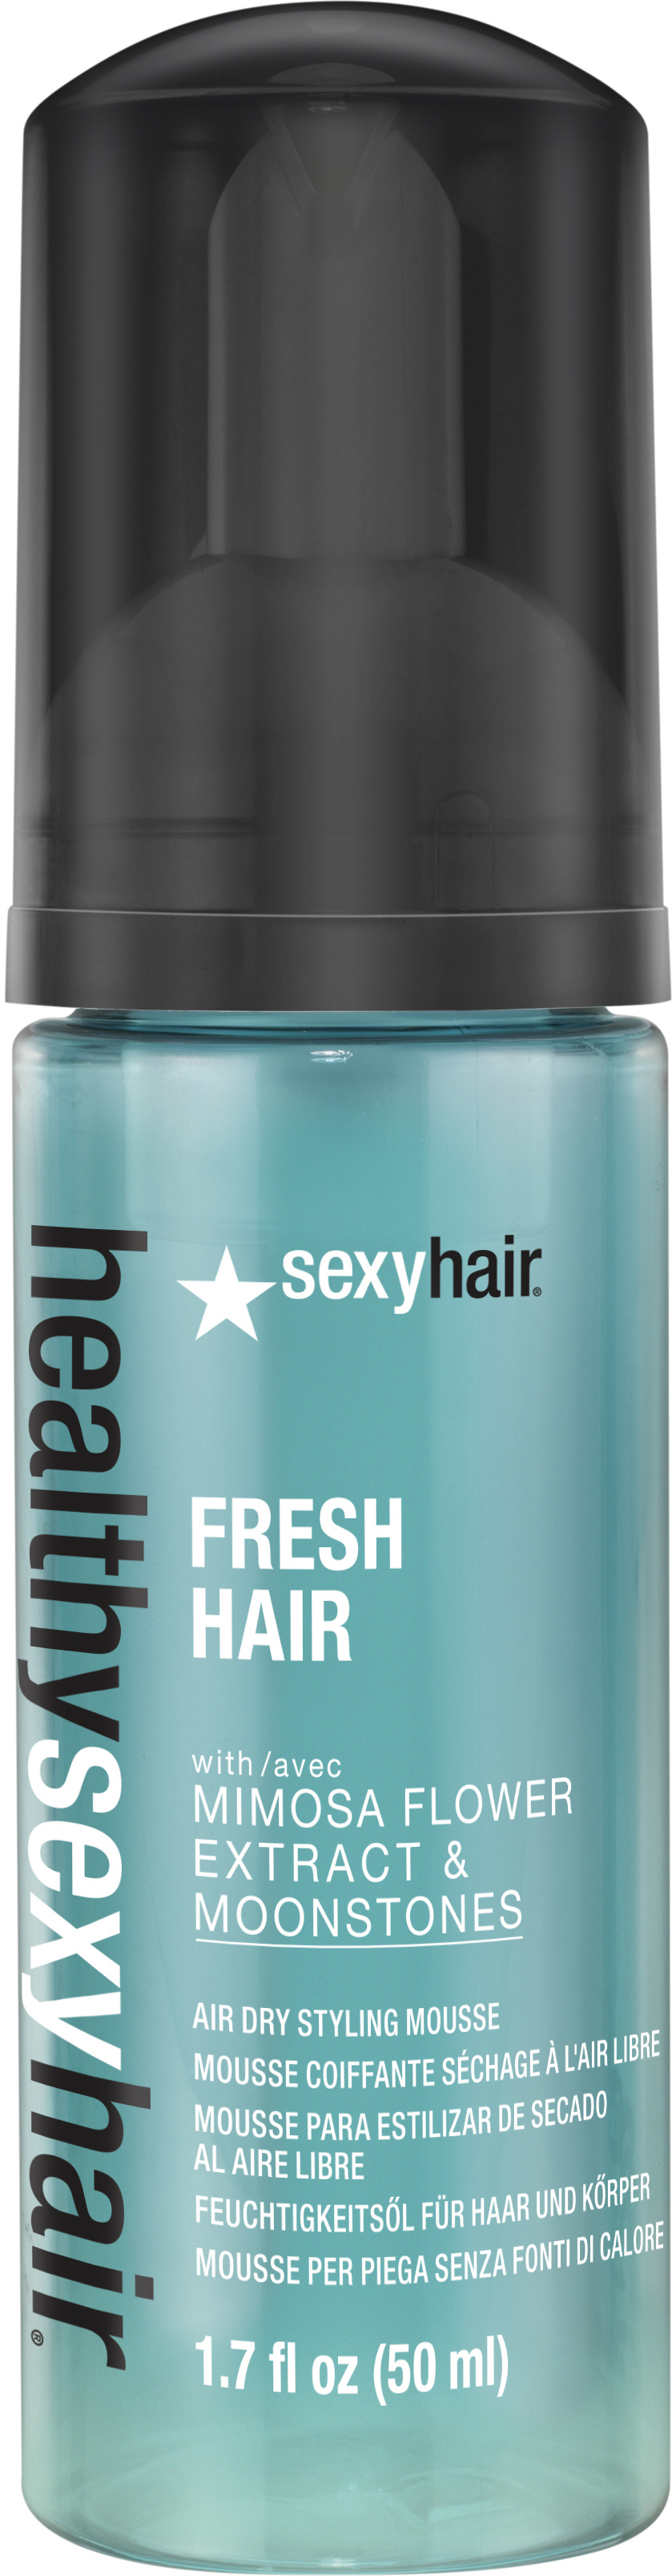 SEXY HAIR Мусс для укладки волос без фена / HEALTHY 50 мл